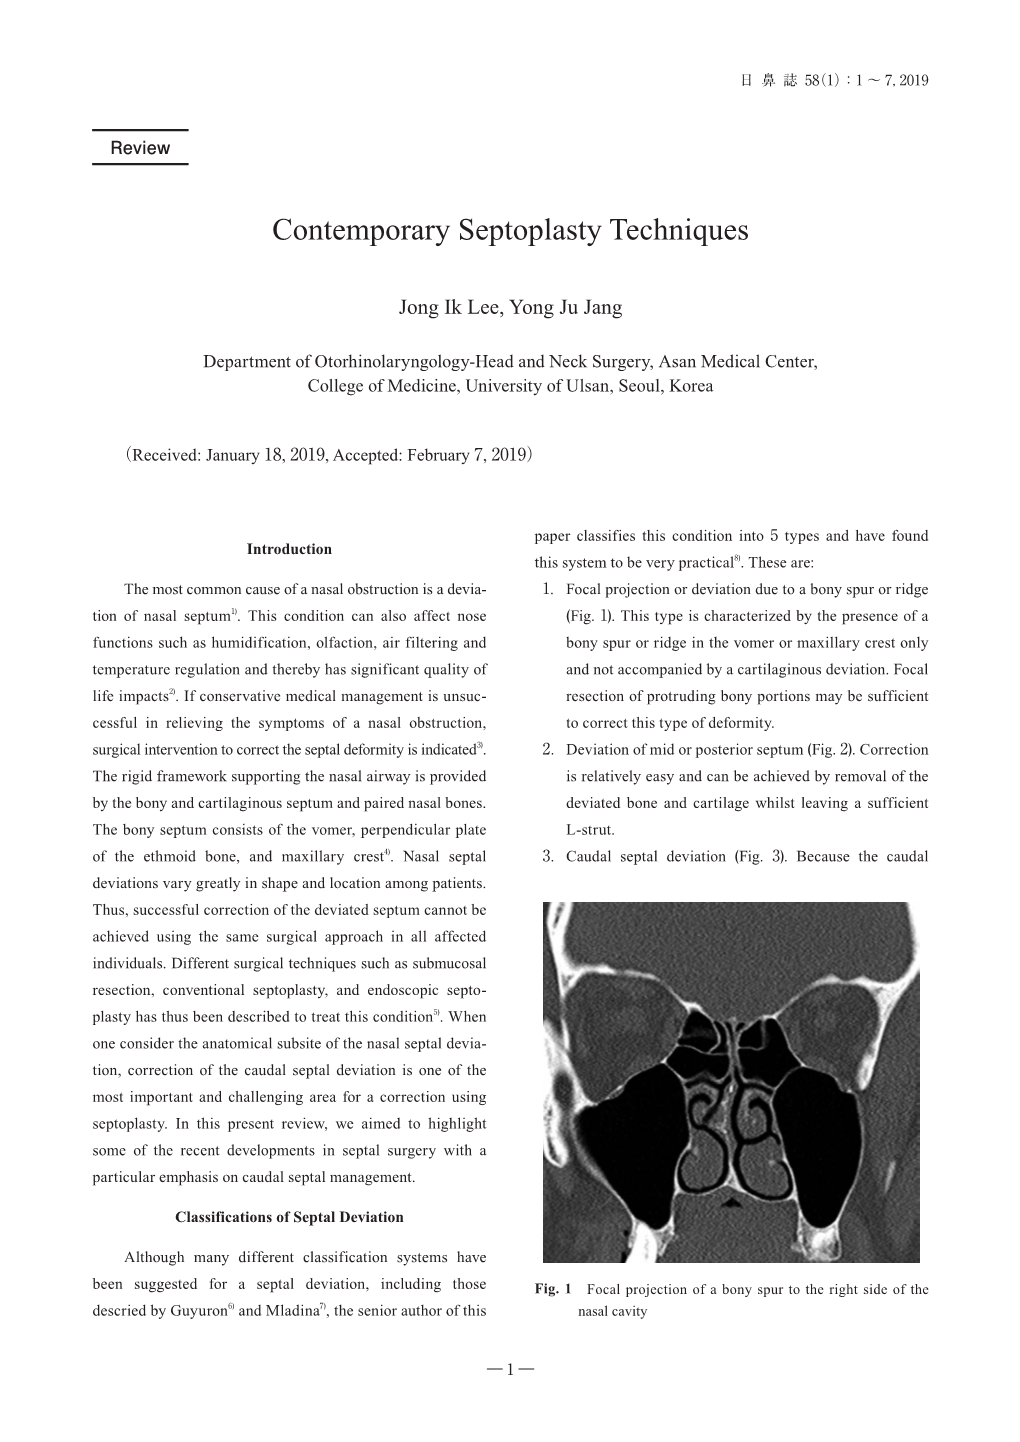 Contemporary Septoplasty Techniques